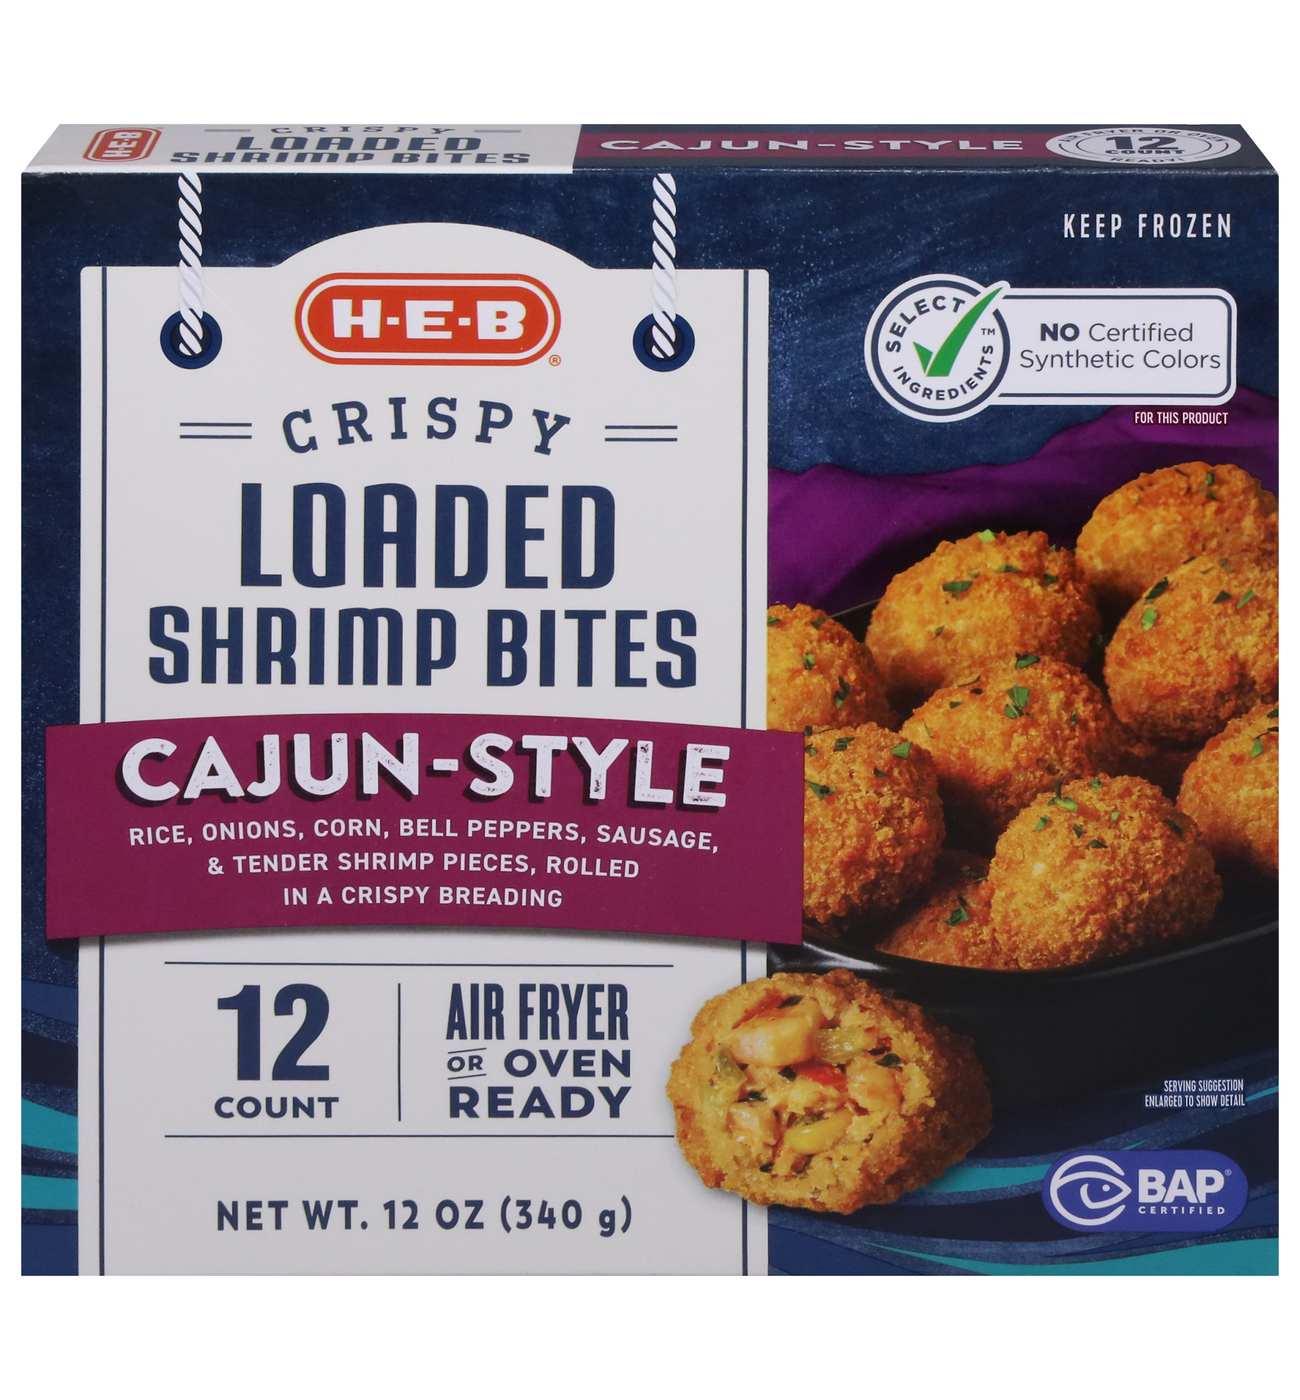 H-E-B Frozen Crispy Loaded Shrimp Bites – Cajun-Style; image 1 of 2